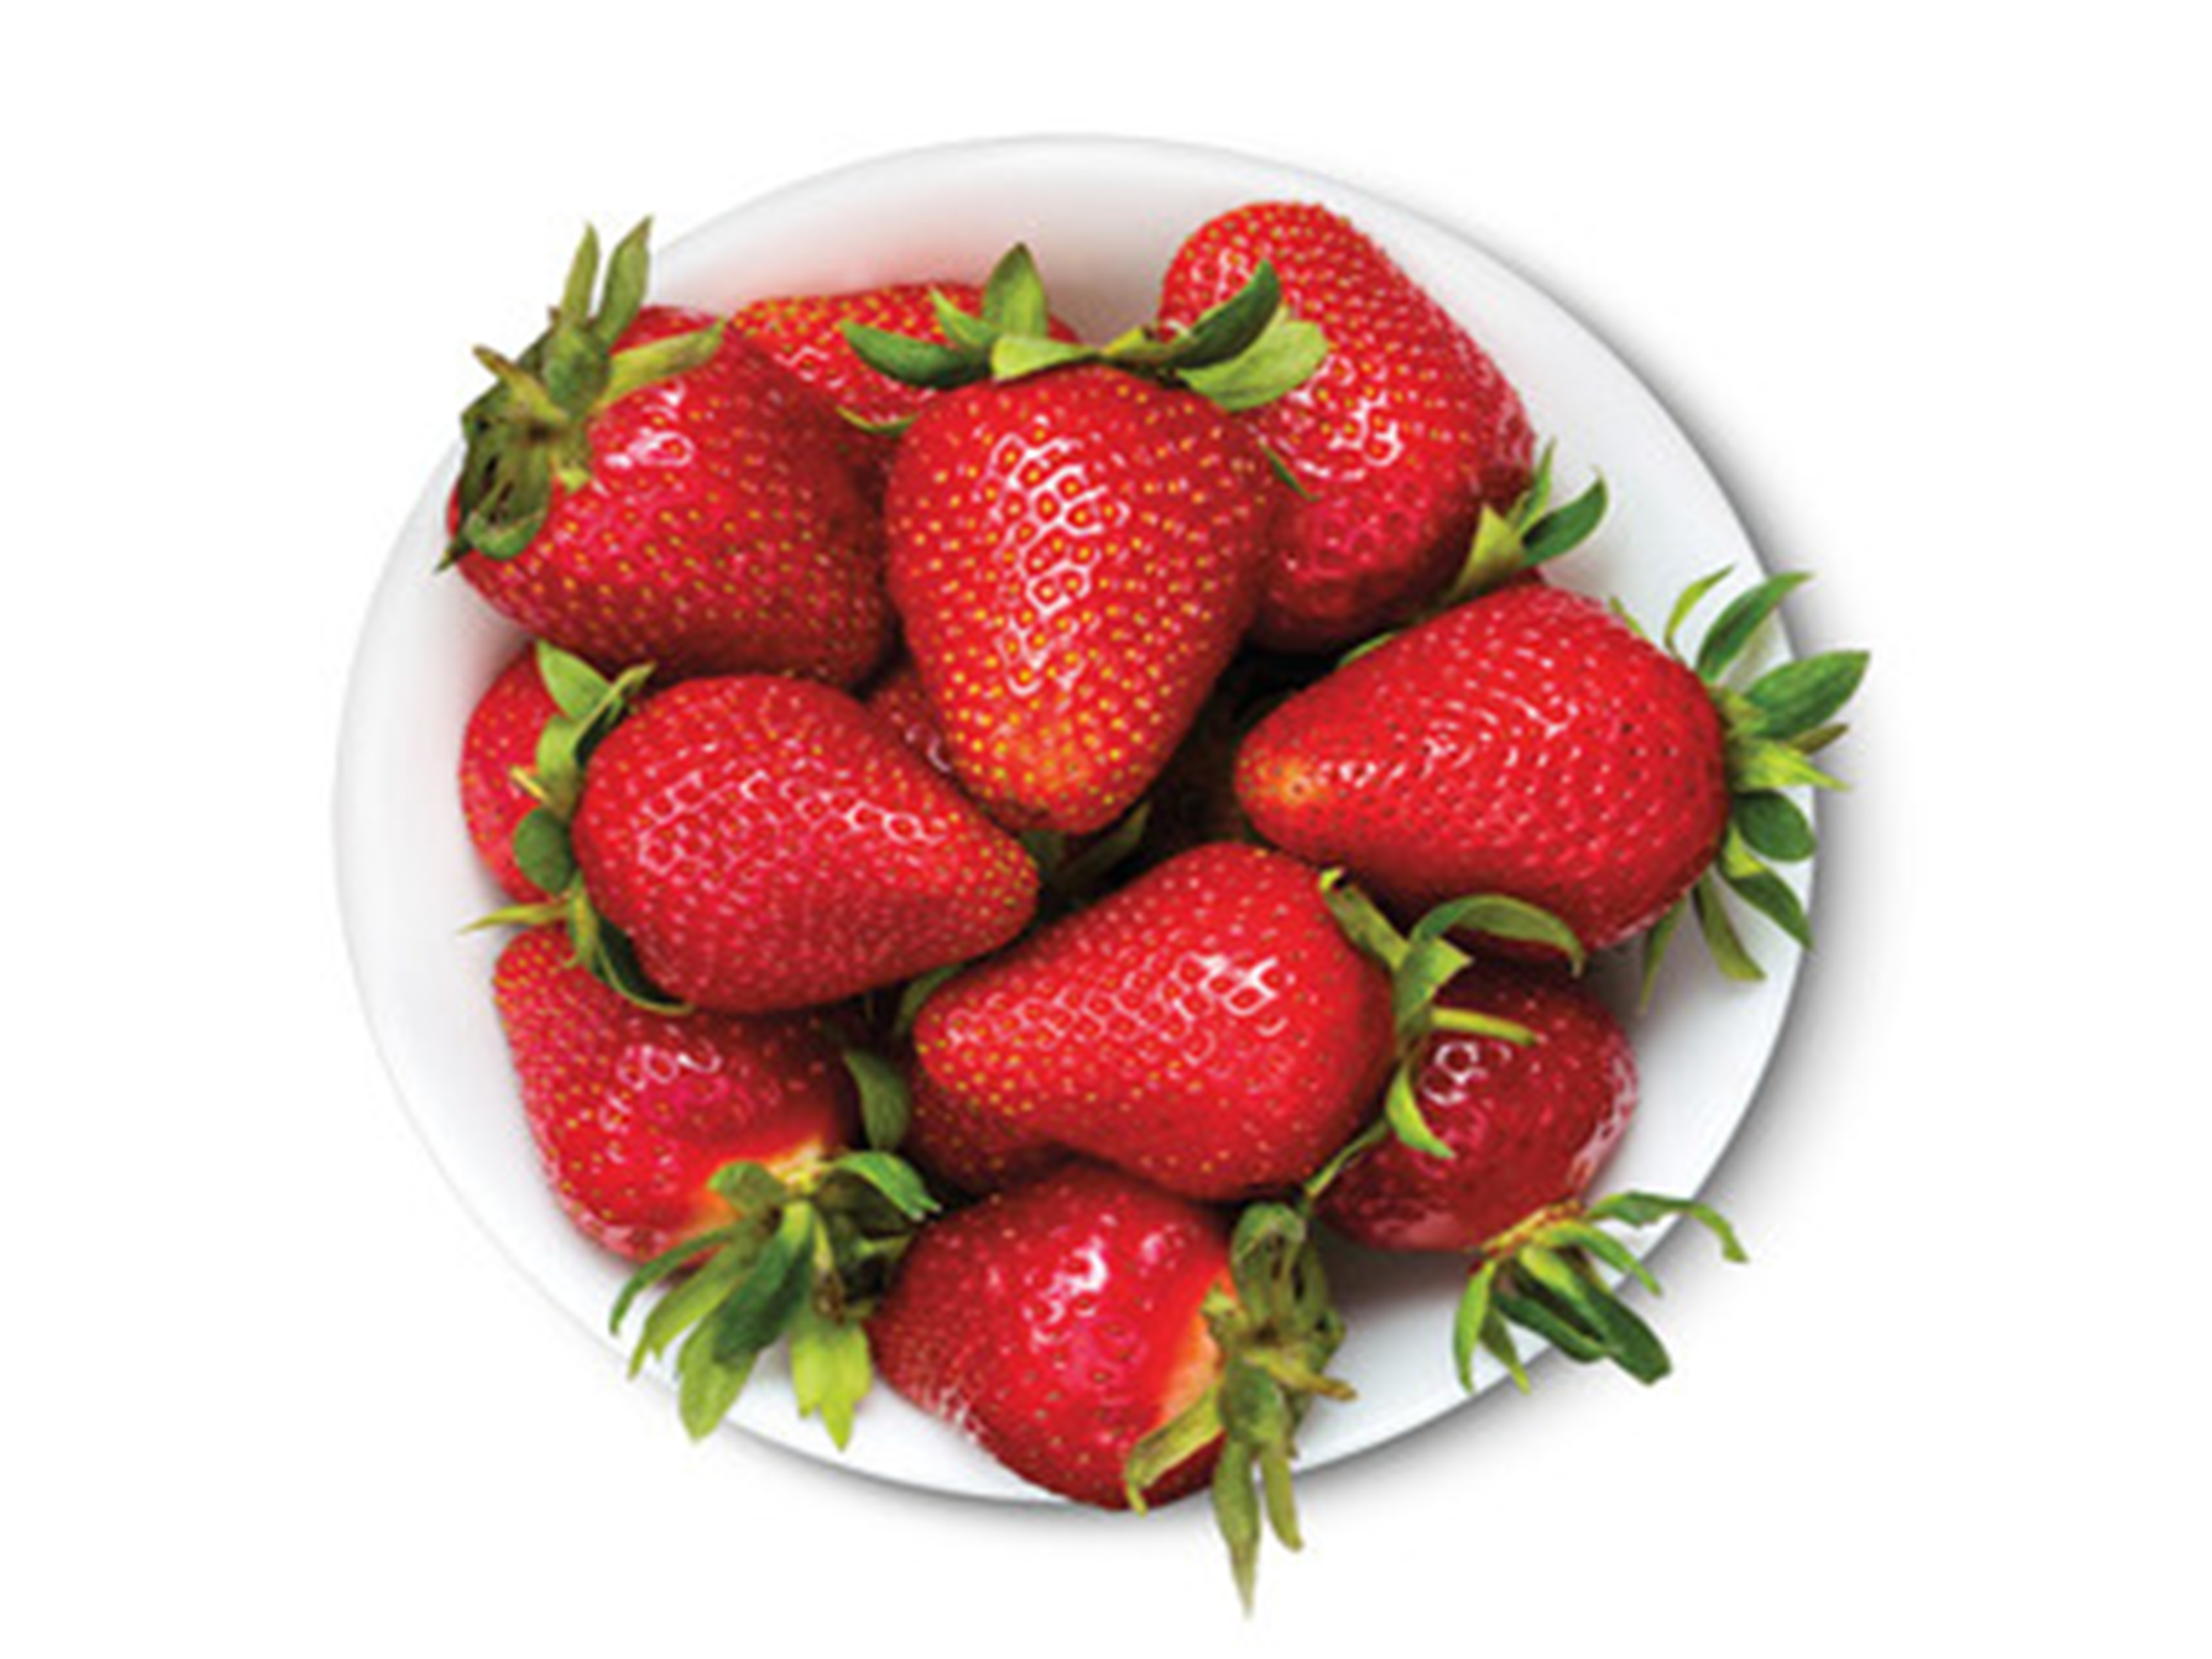 Favorite Fruit: Strawberries